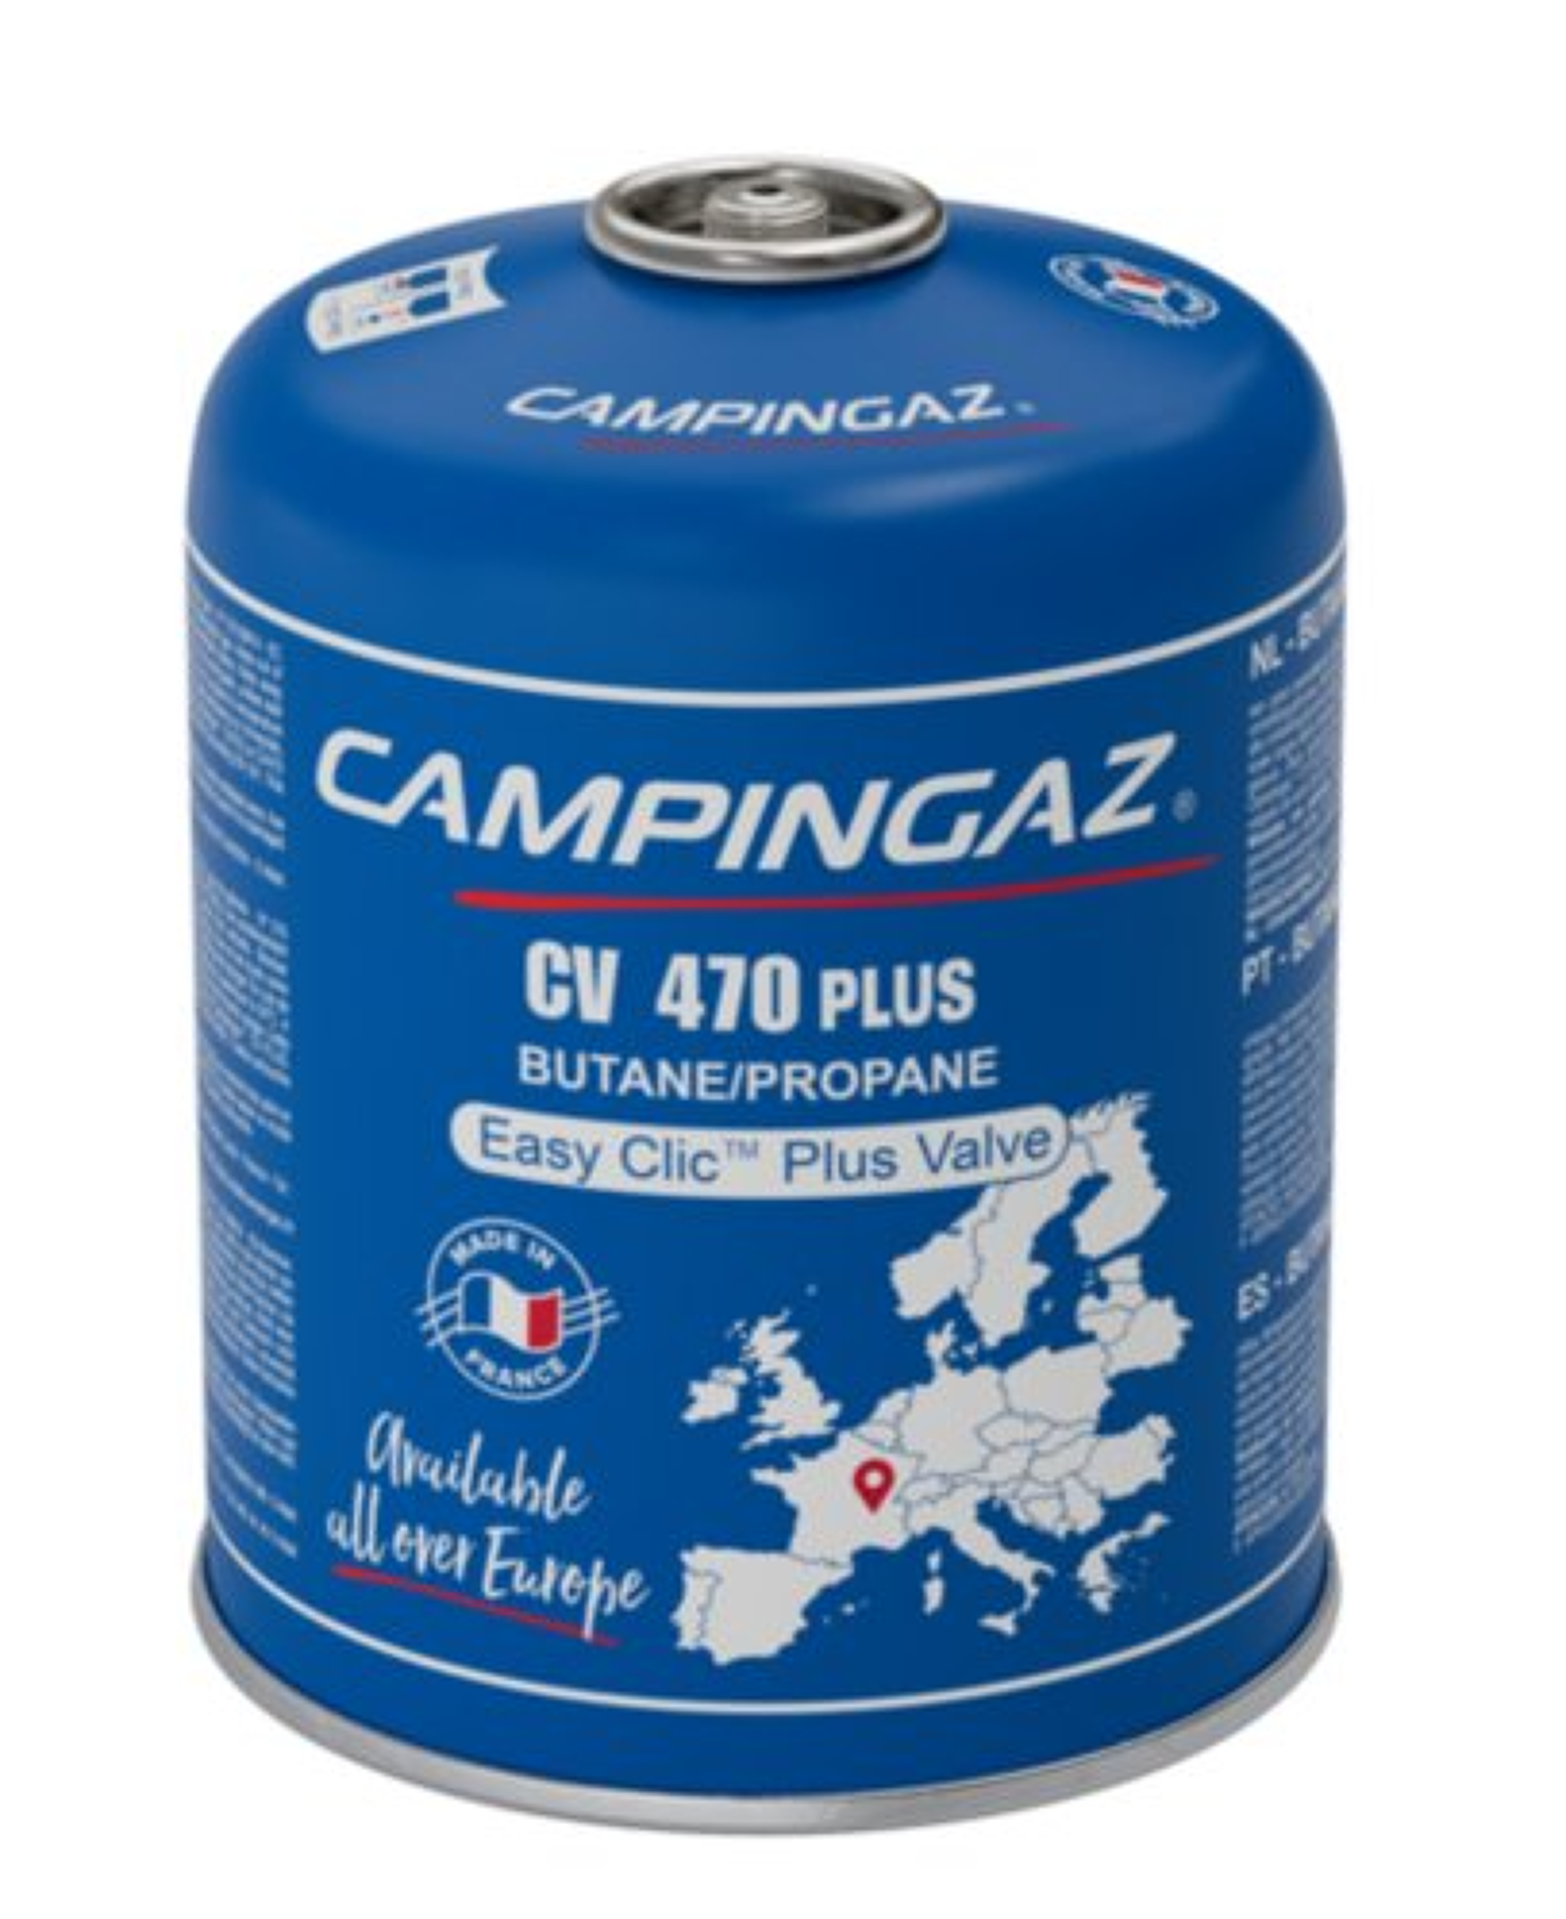 Kartuše pro Campingaz CV 470 Plus